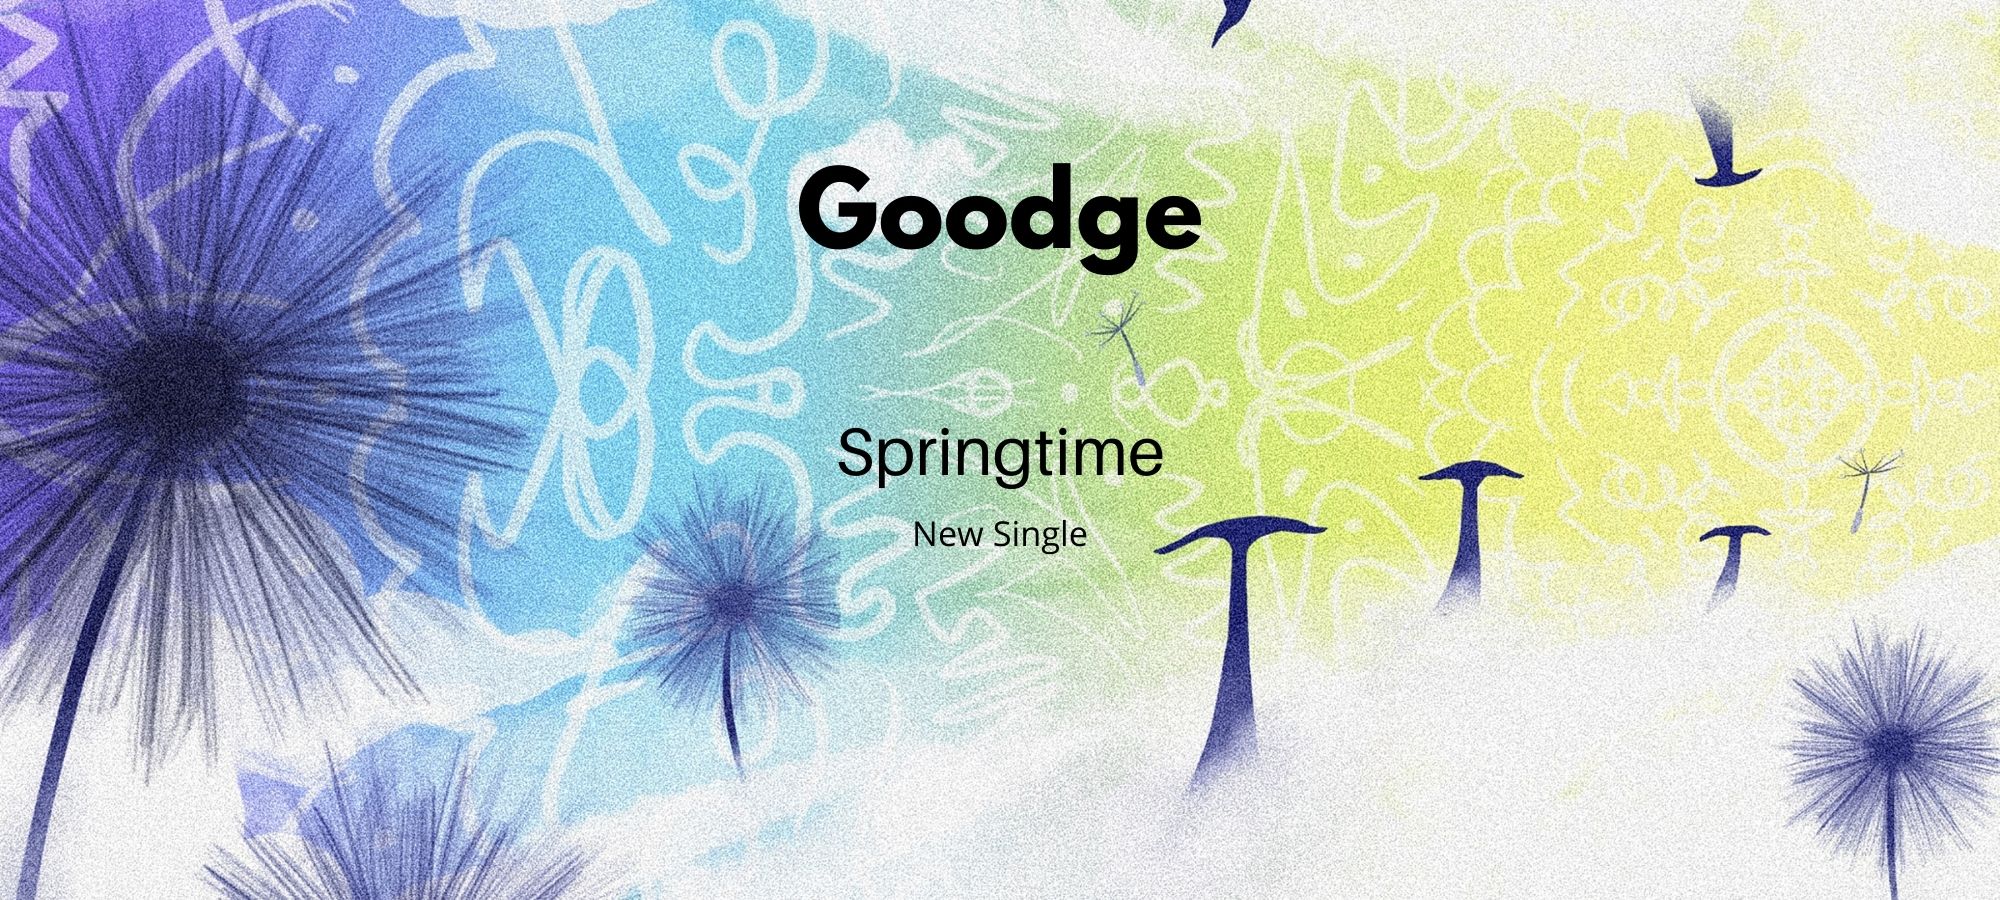 Goodge - Springtime singles lofi chill hip hop music jazz